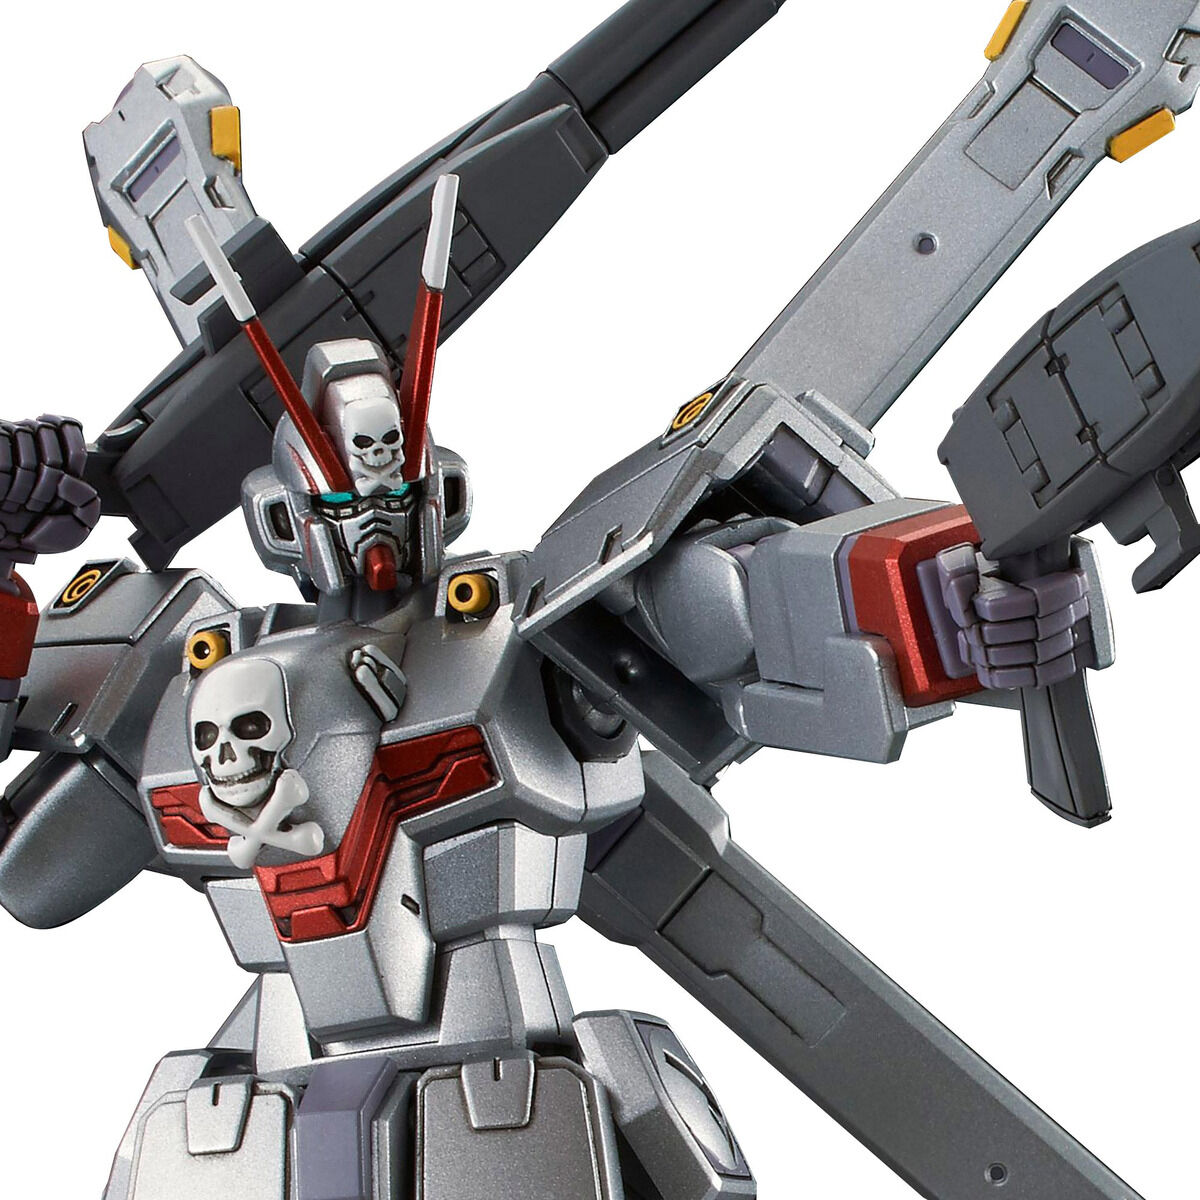 HGUC 1/144 XM-X0(F97) Crossbone Gundam X-0